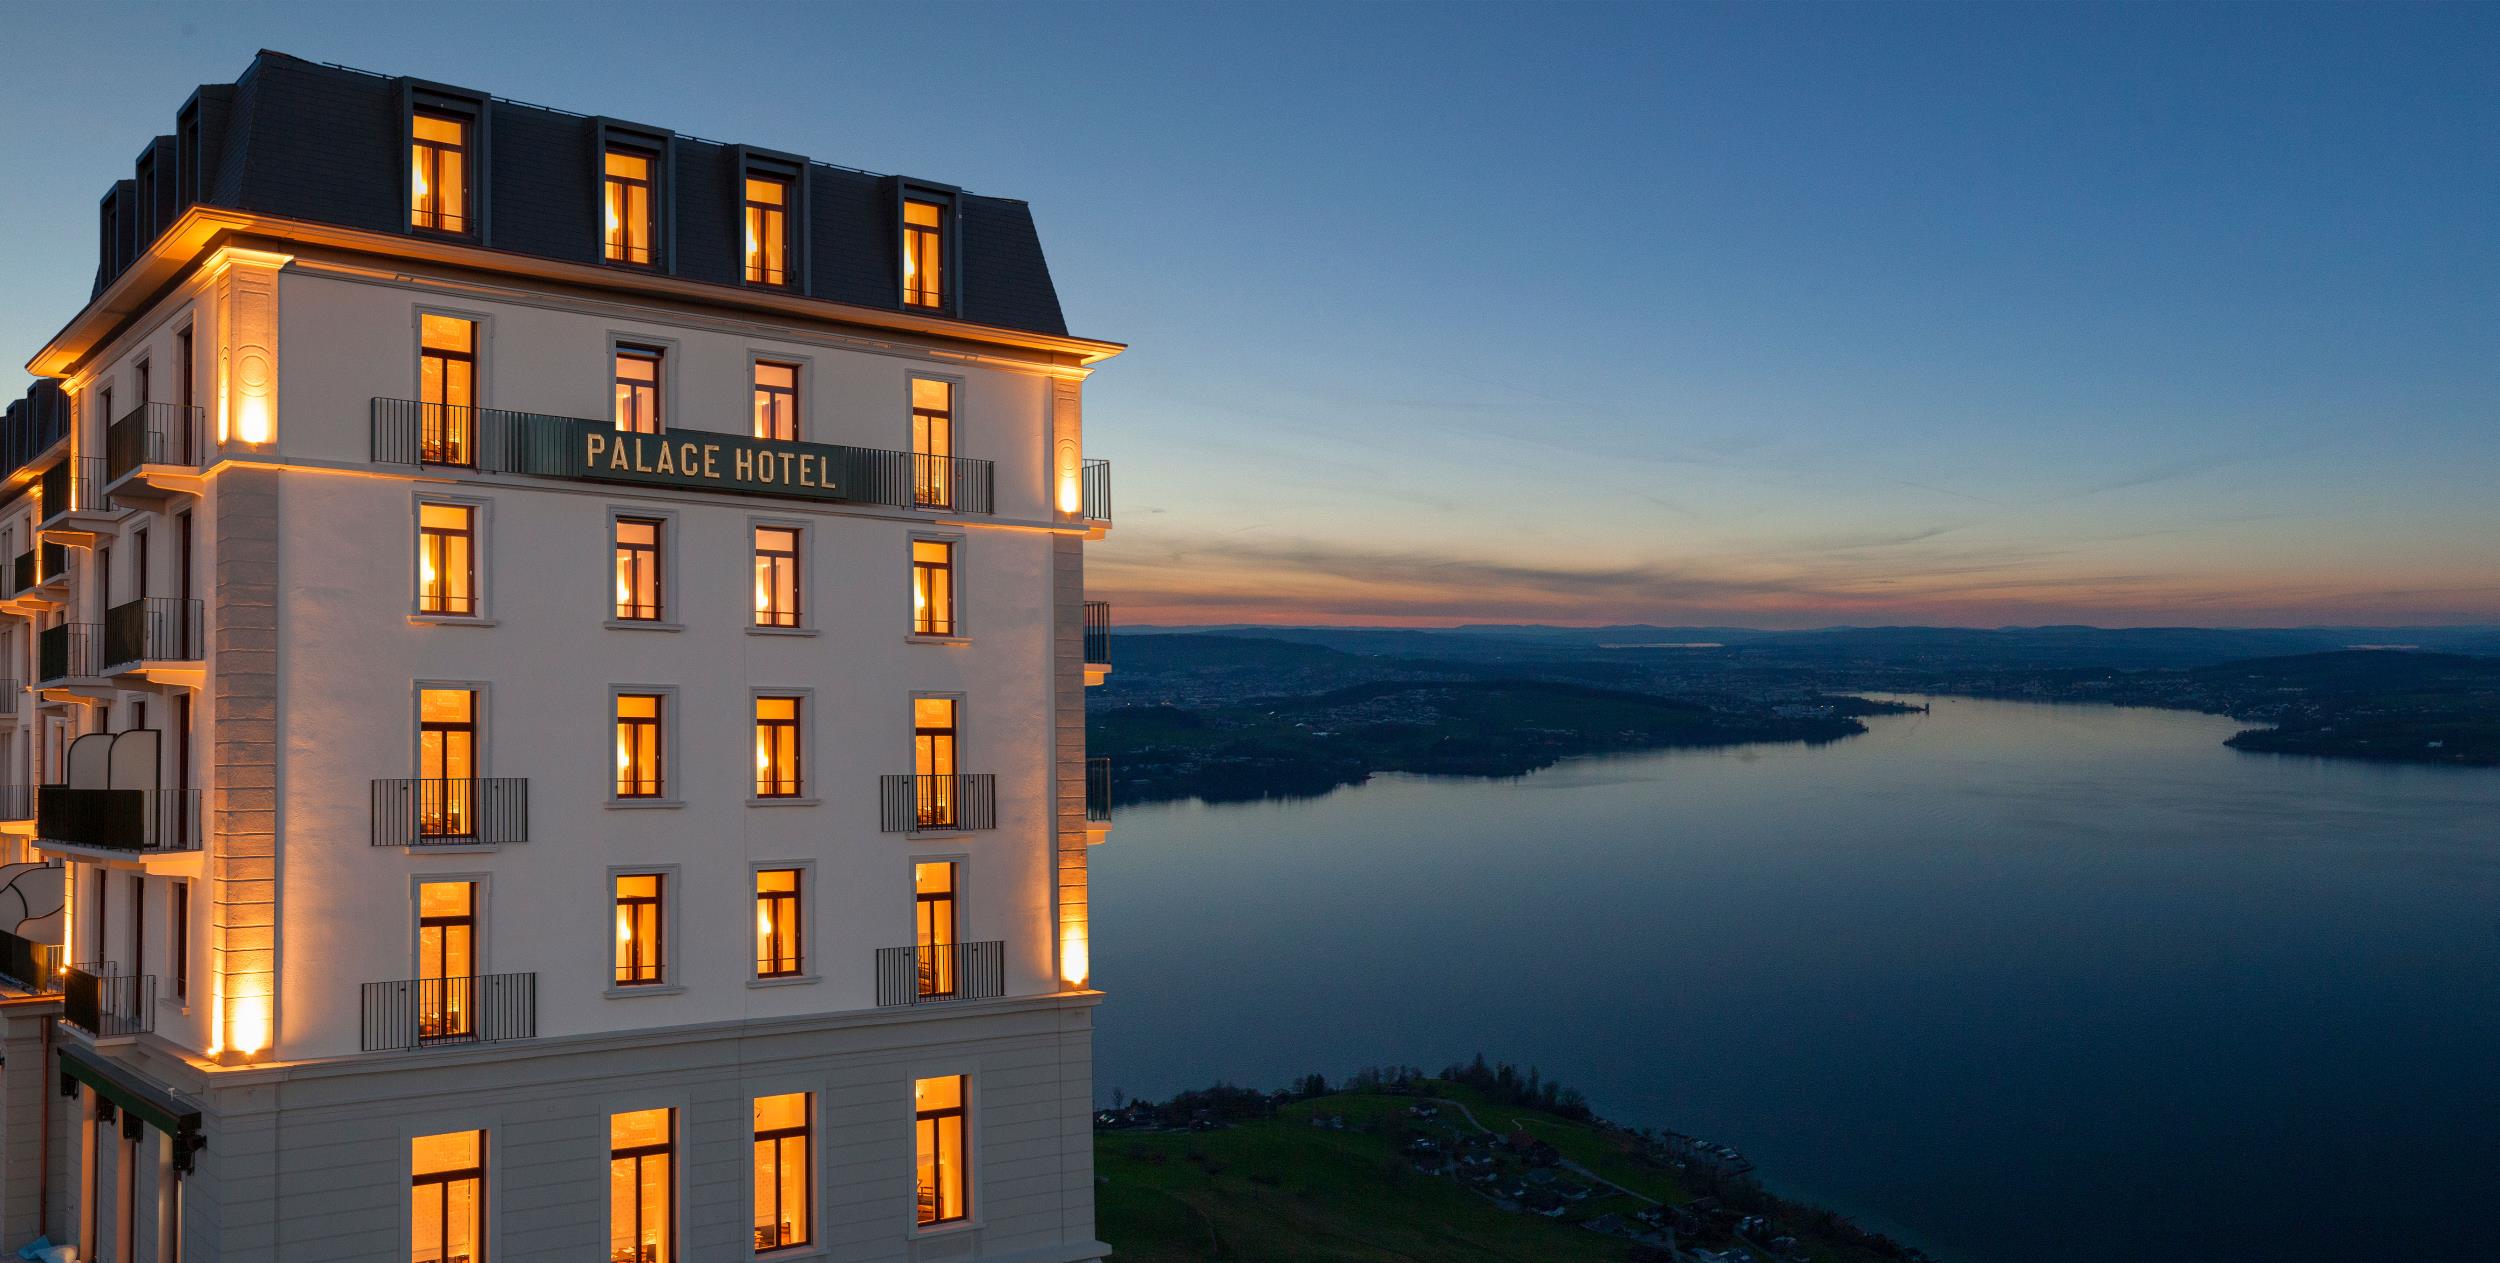 Palace Hotel - Bürgenstock Resort Luzern